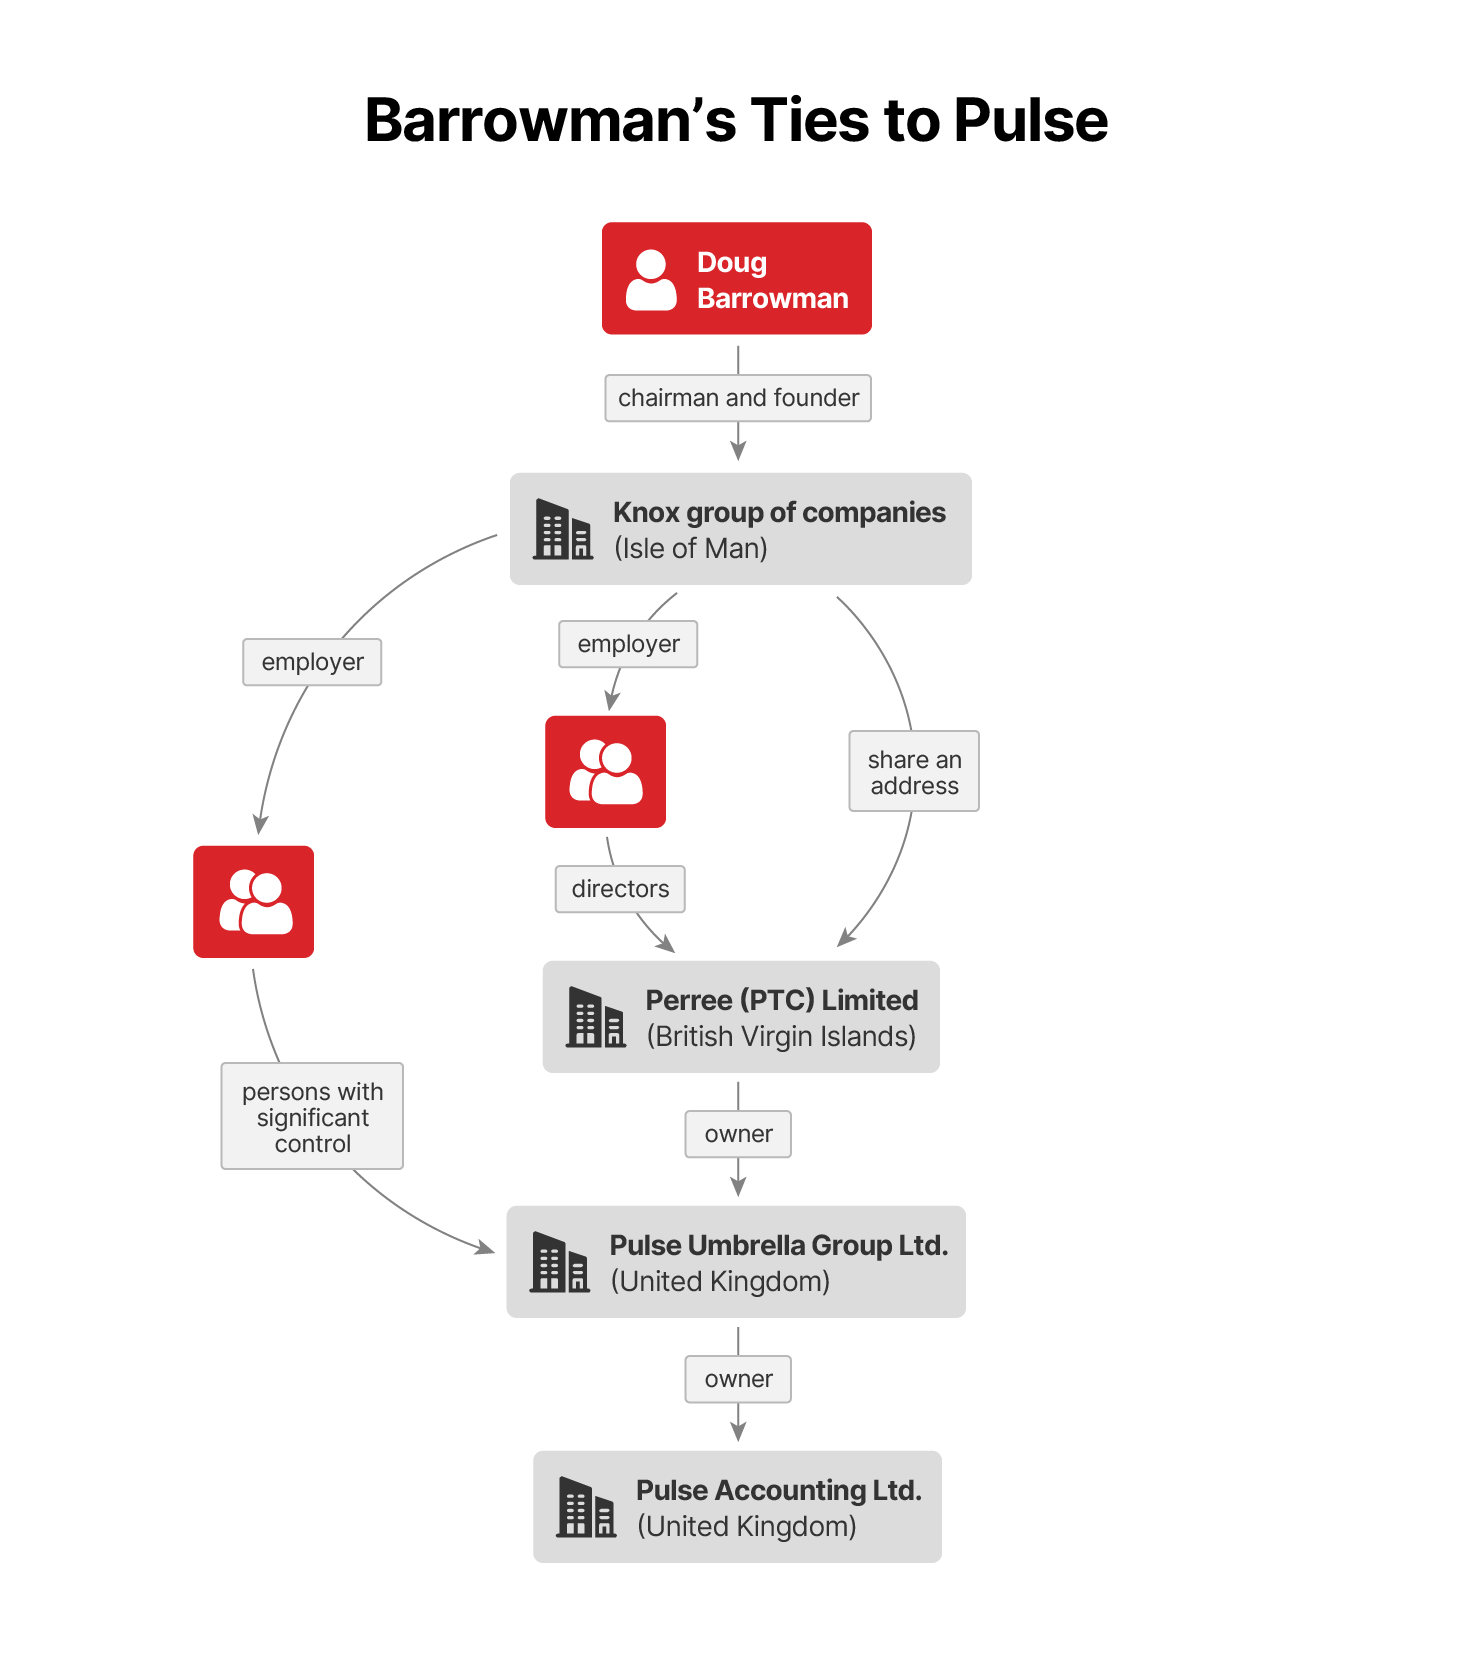 investigations/graph-uk-barrowman-2.png